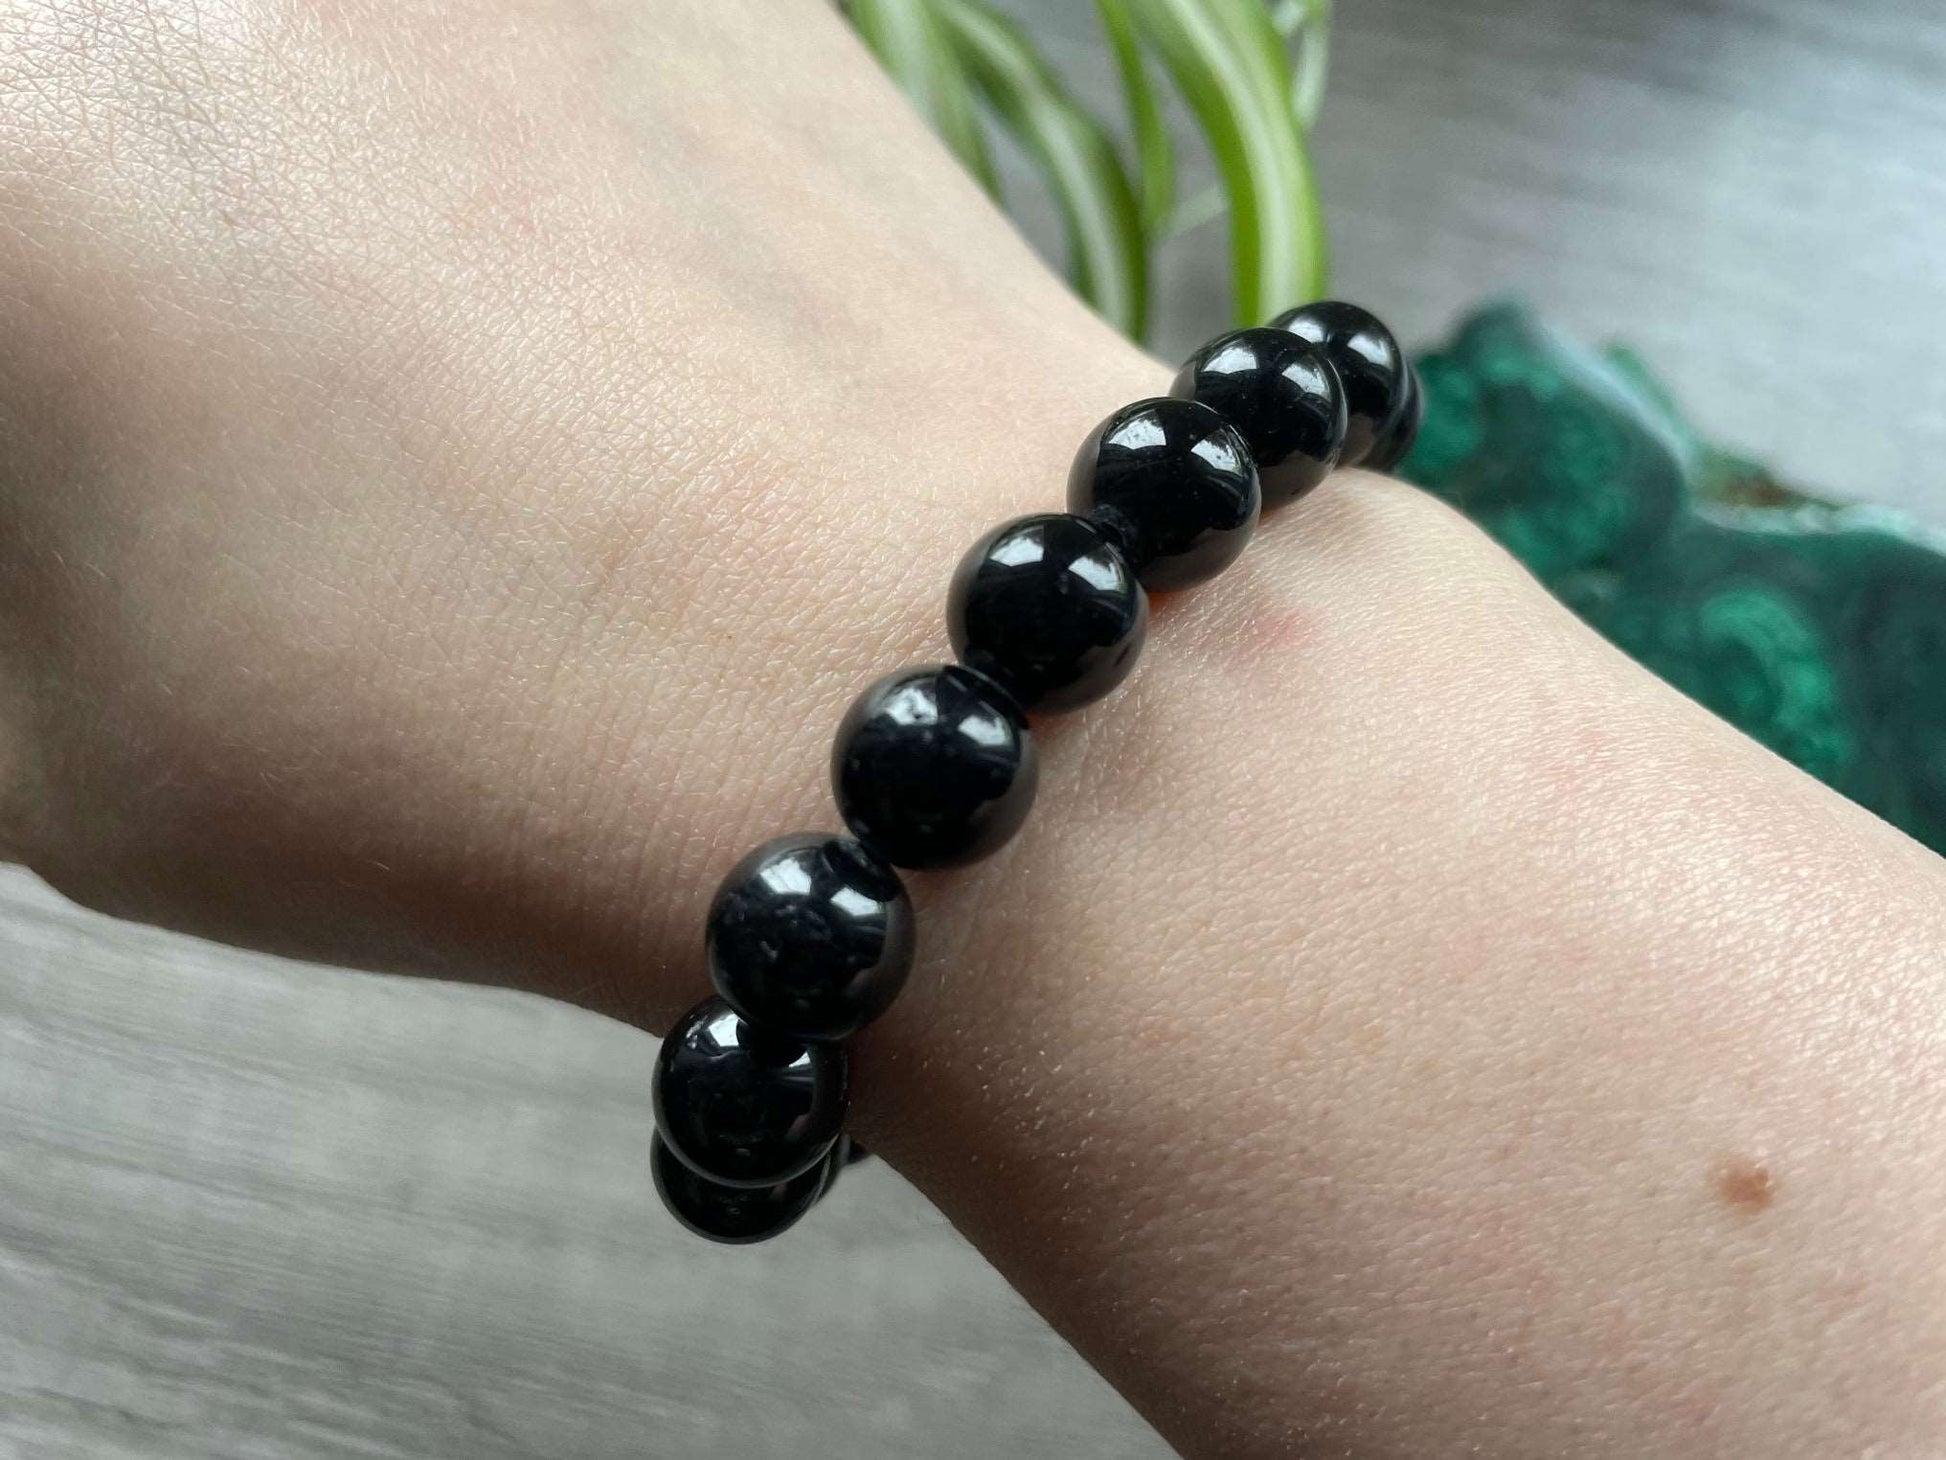 Pictured is a black tourmaline bead bracelet.